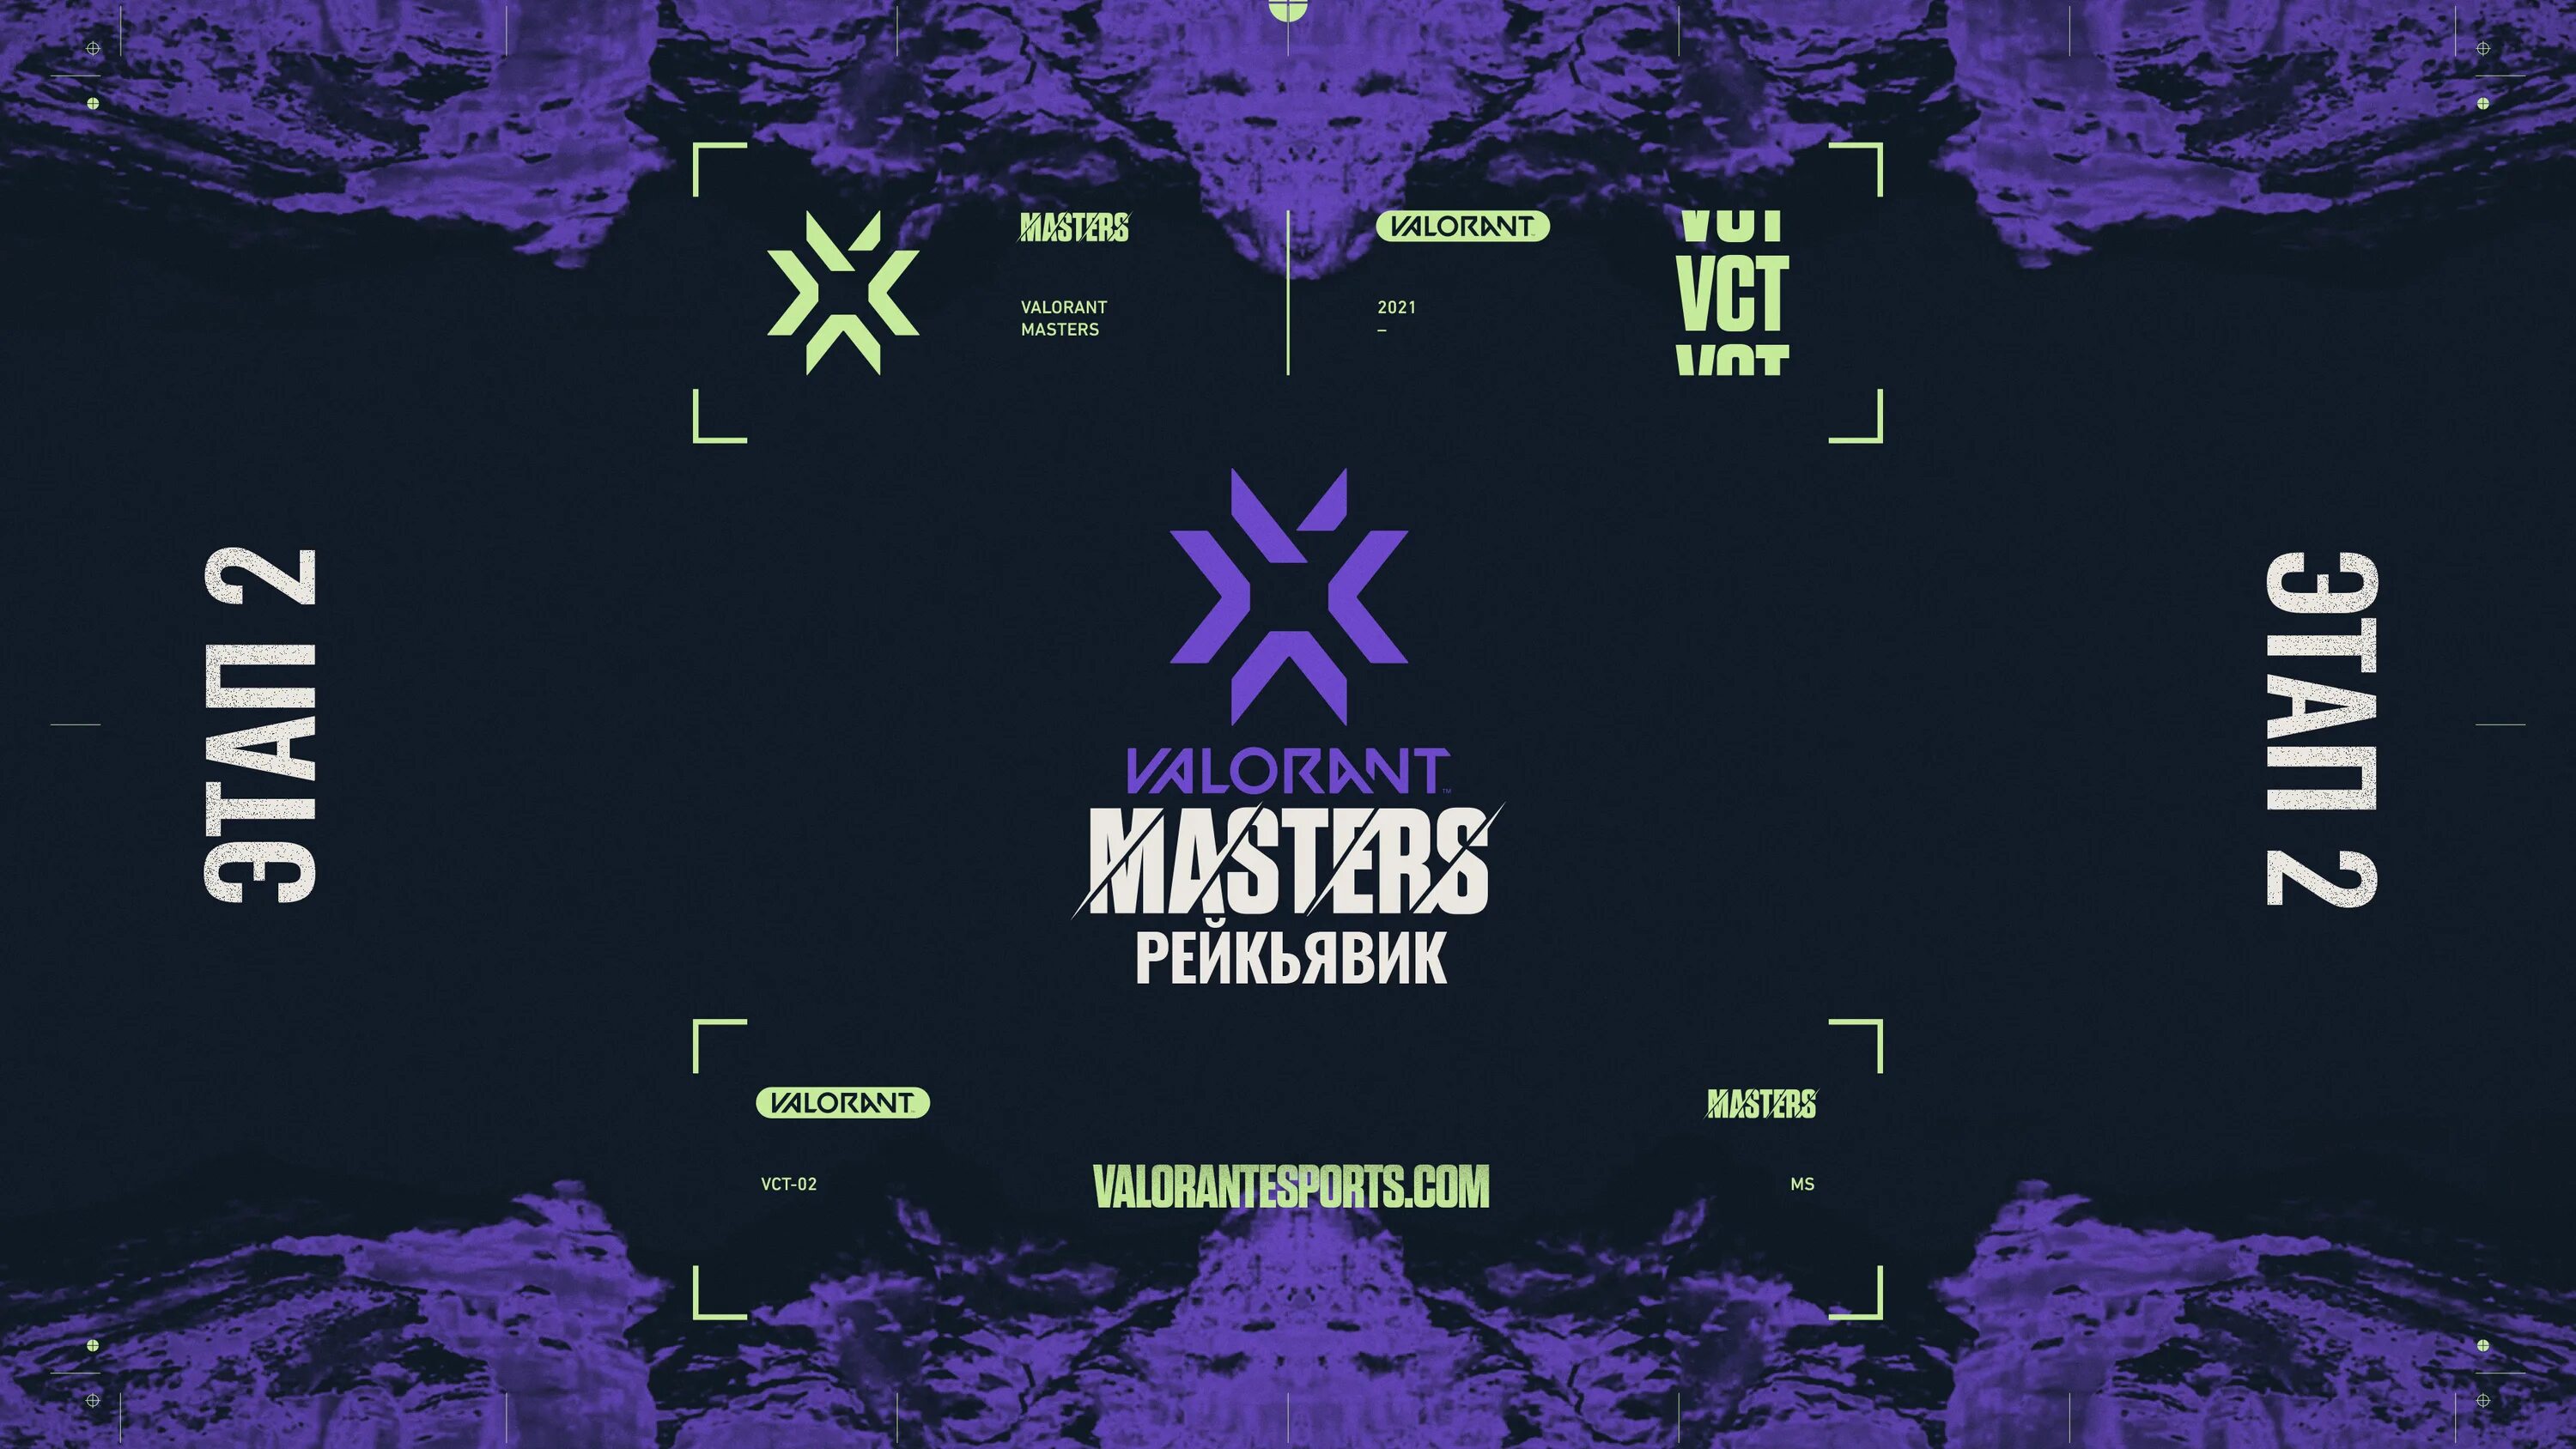 Valorant Masters Reykjavik. VCT Masters Reykjavík. VCT Masters Reykjavík 2021. Valorant Masters Reykjavik 2022. 22 masters